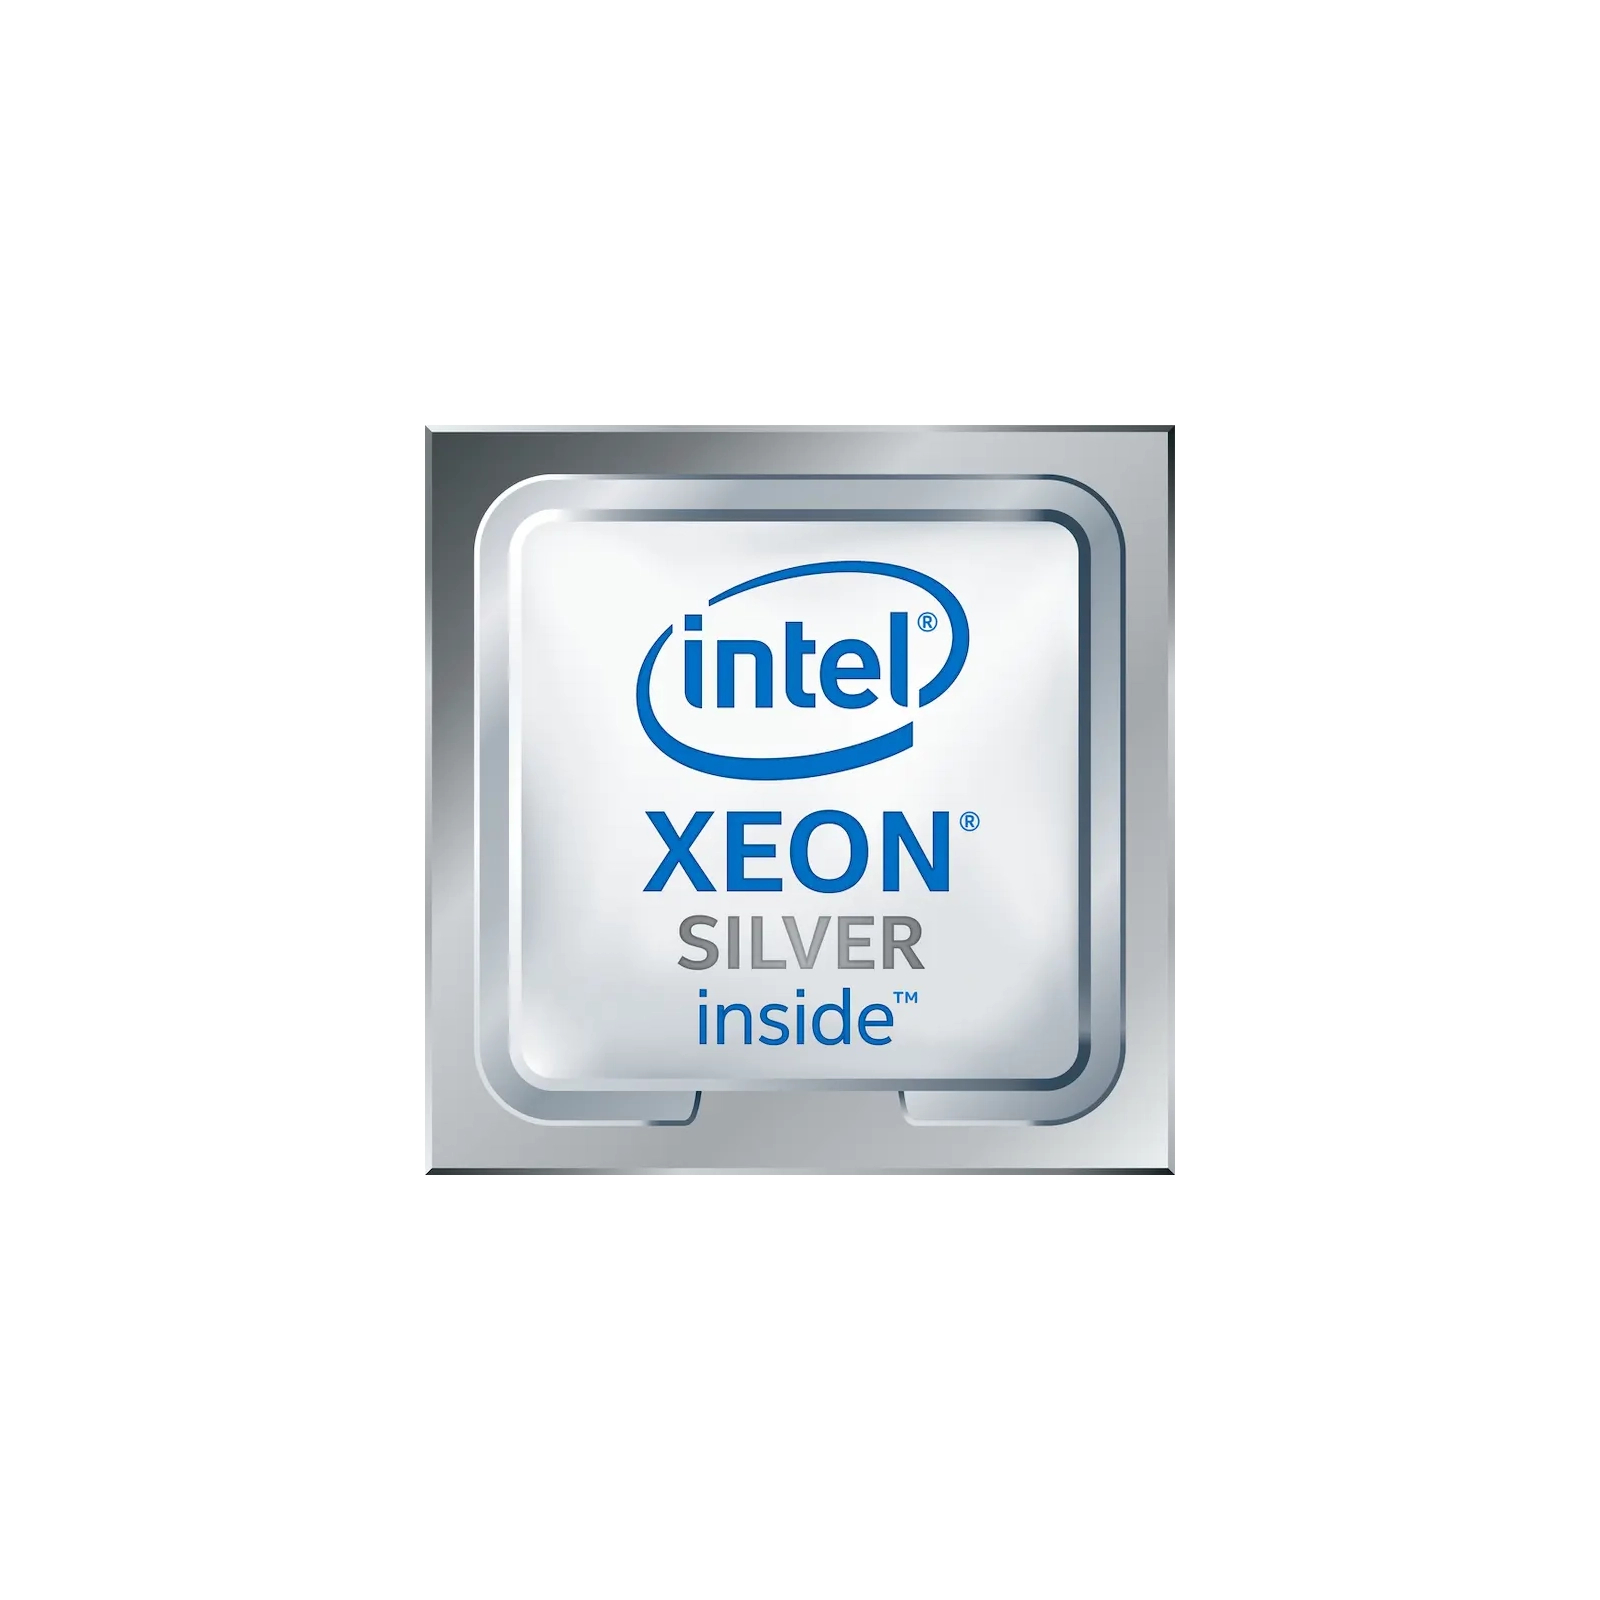 Процессор серверный Dell Intel Xeon Silver 4310 2.1GHz Twelve Core Processor, 12C/24T, 10.4GT/s, 18M Cache, Turbo (338-CBXK)